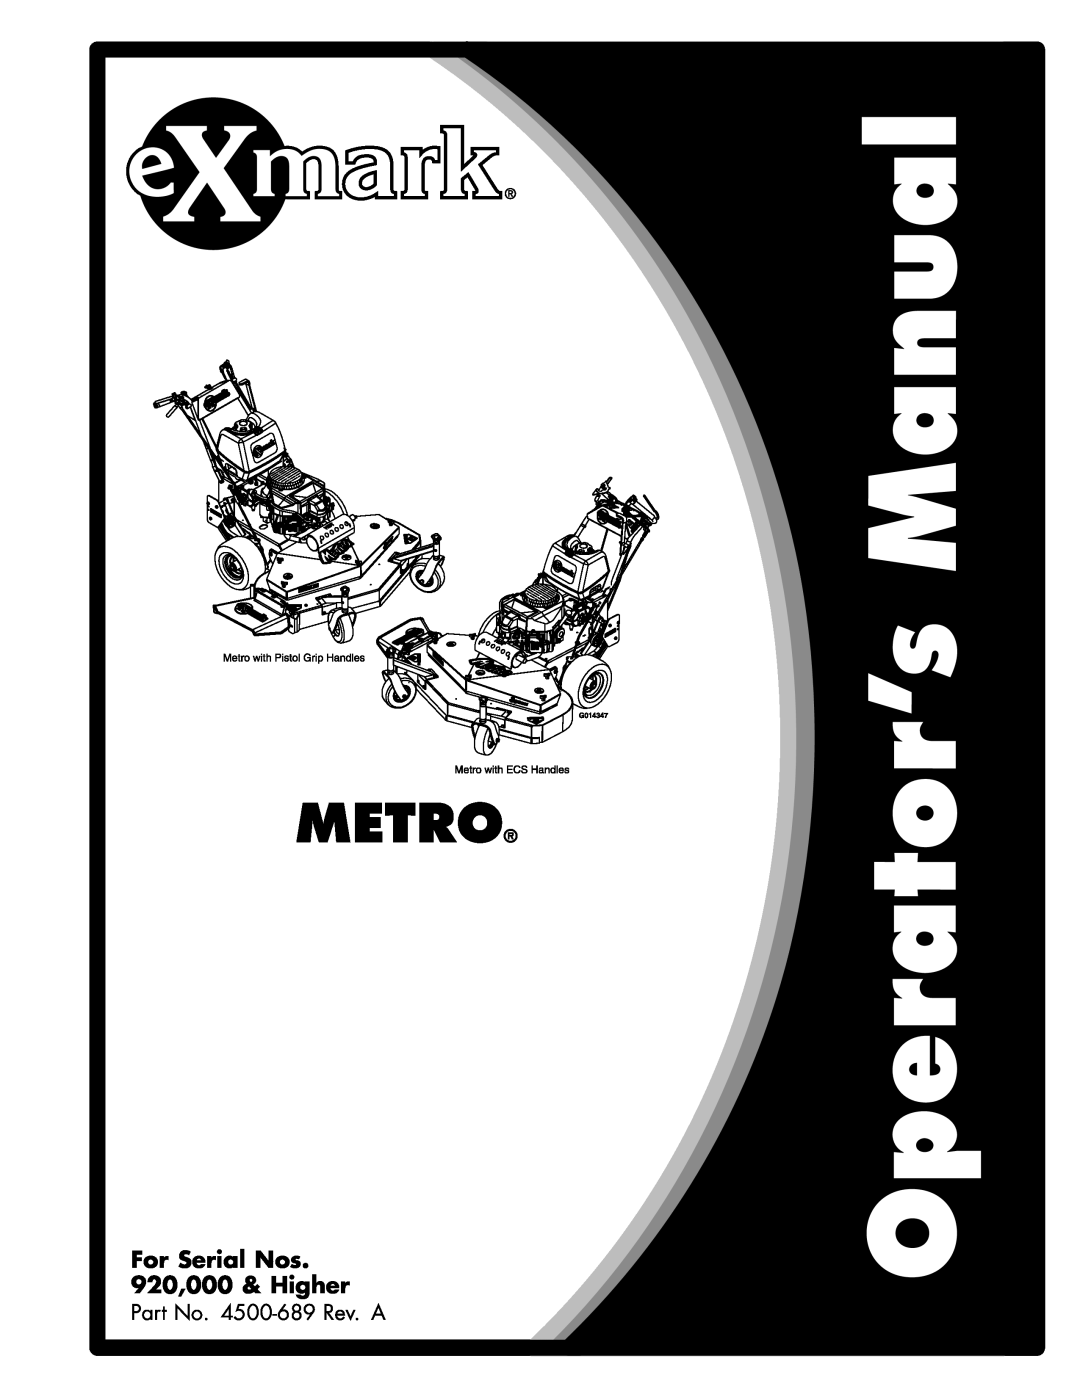 Exmark 4500-689 manual Metro, For Serial Nos 920,000 & Higher 